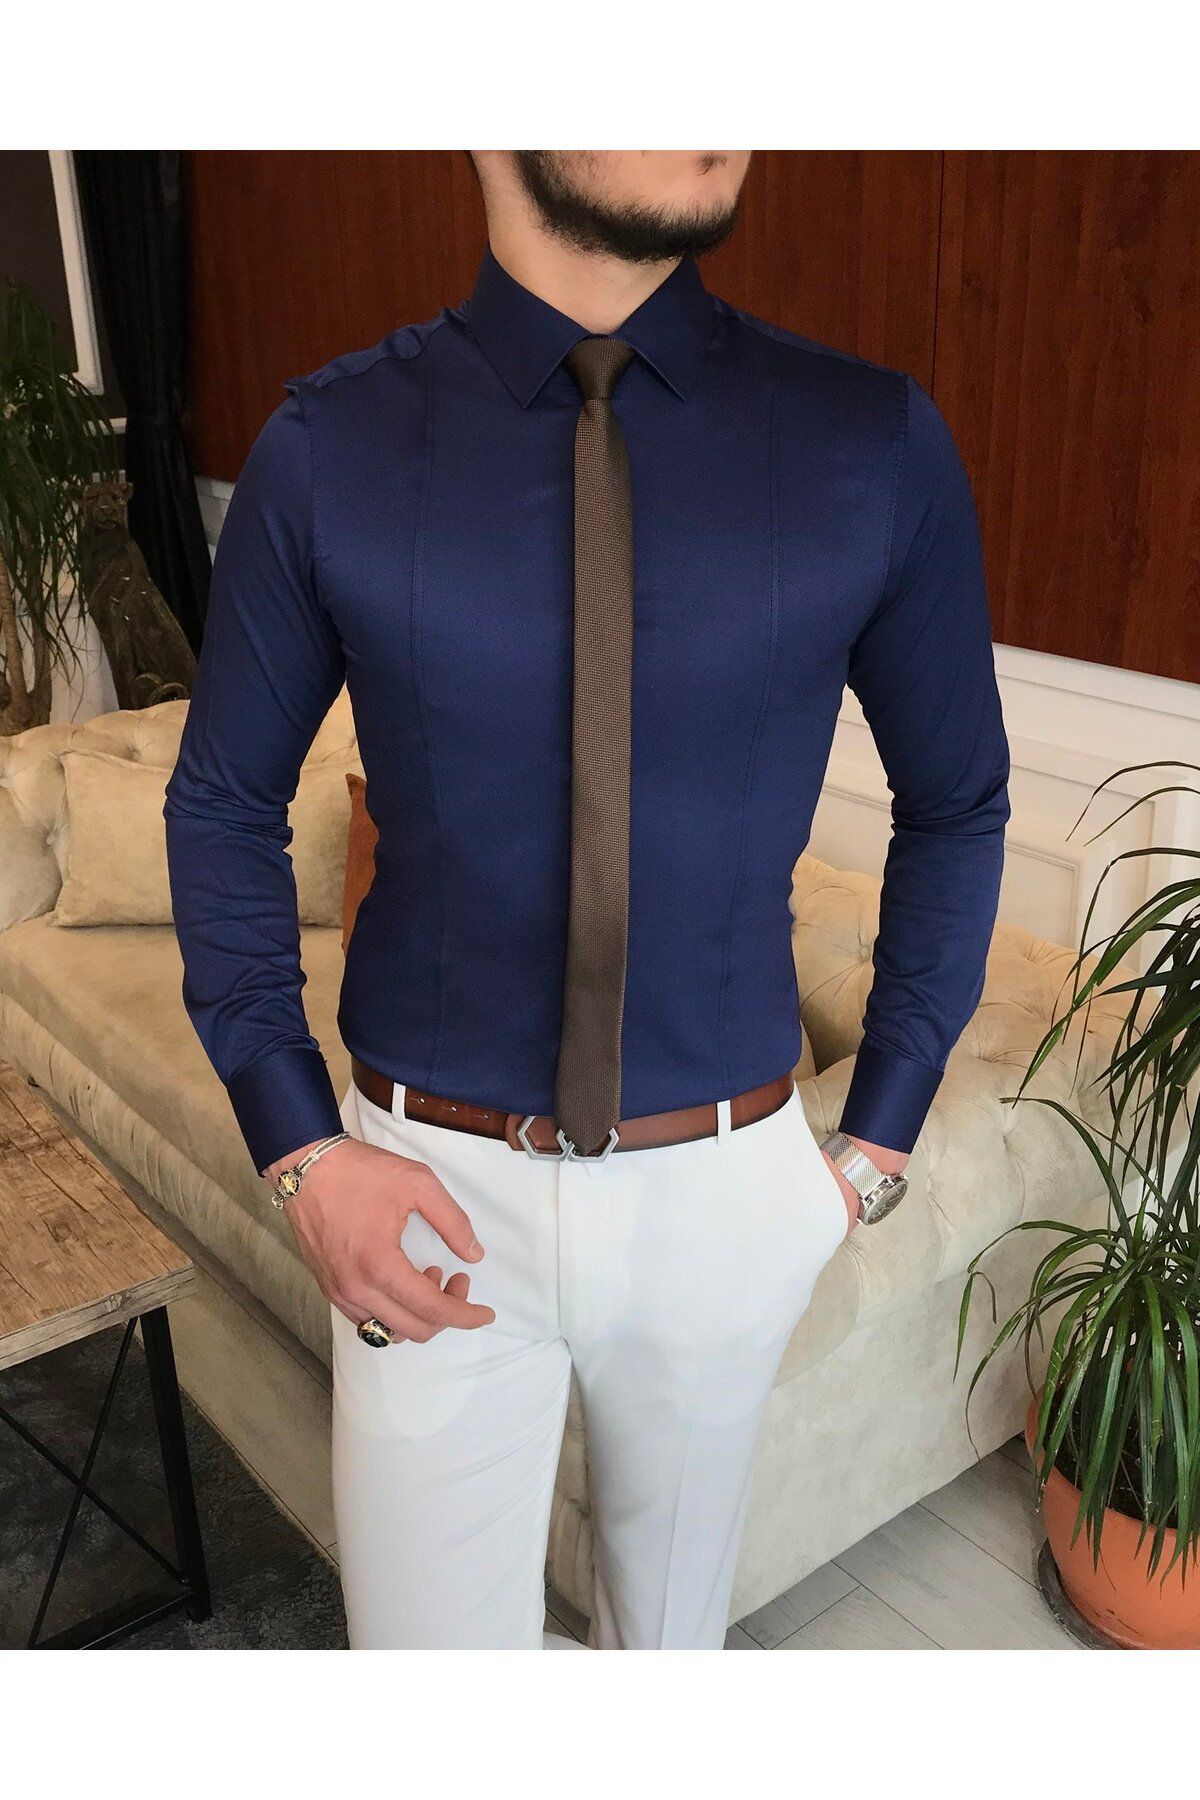 TerziAdemAltun İtalyan Stil Slim Fit Erkek Kravat Yaka Gömlek Lacivert T6814